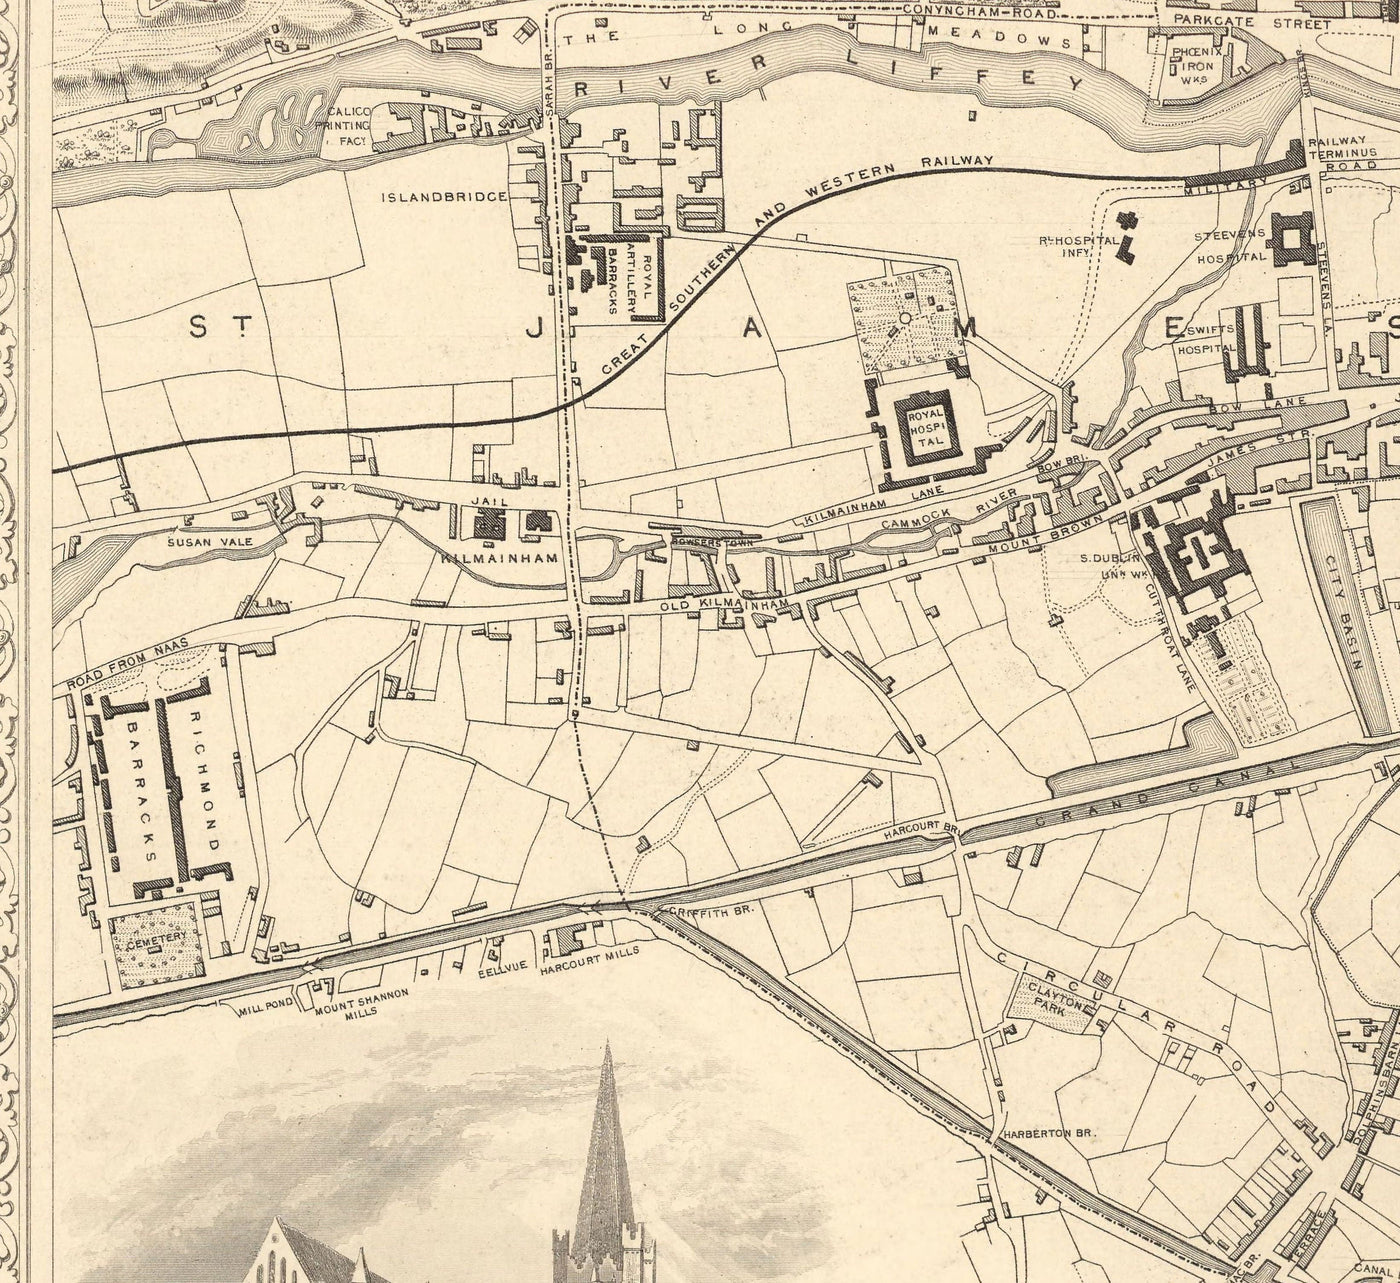 Old Map of Dublin, Ireland, 1851 by Tallis & Rapkin - Central, Temple Bar, Stoneybatter, Docklands, Liffey, Leinster